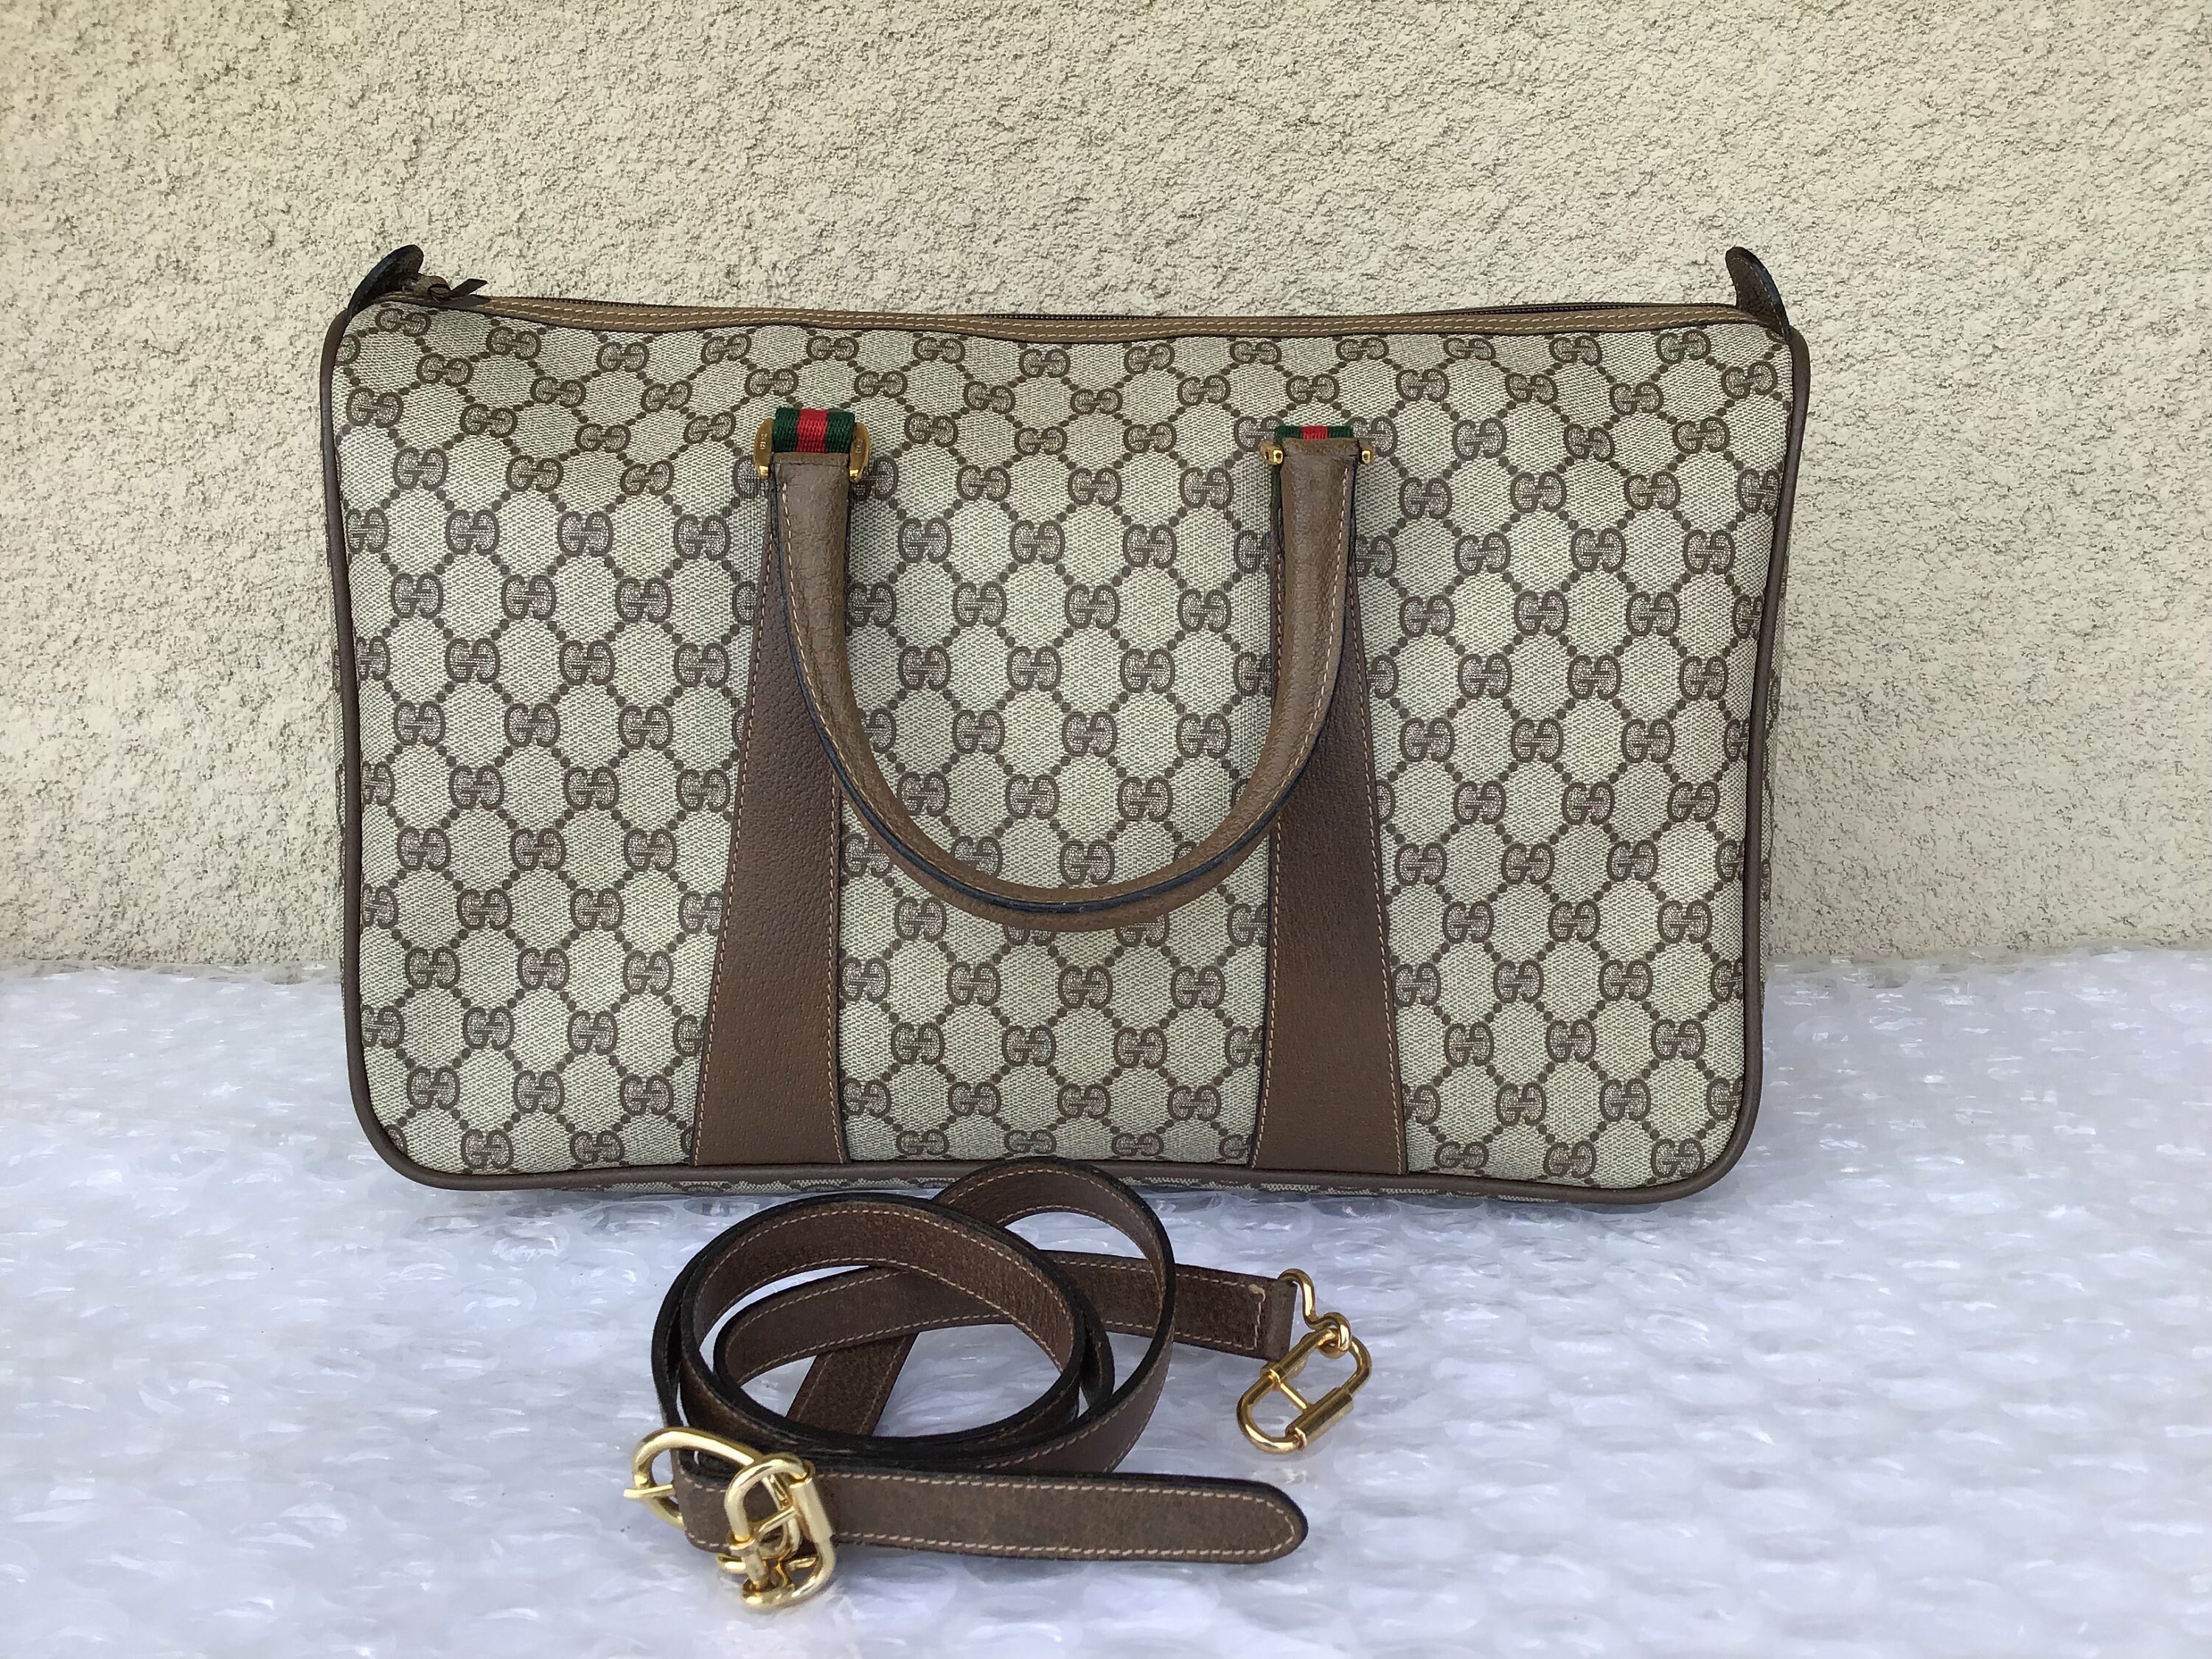 La Femme Vintage - Authentic Gucci doctor bag in navy. 10.5 L x